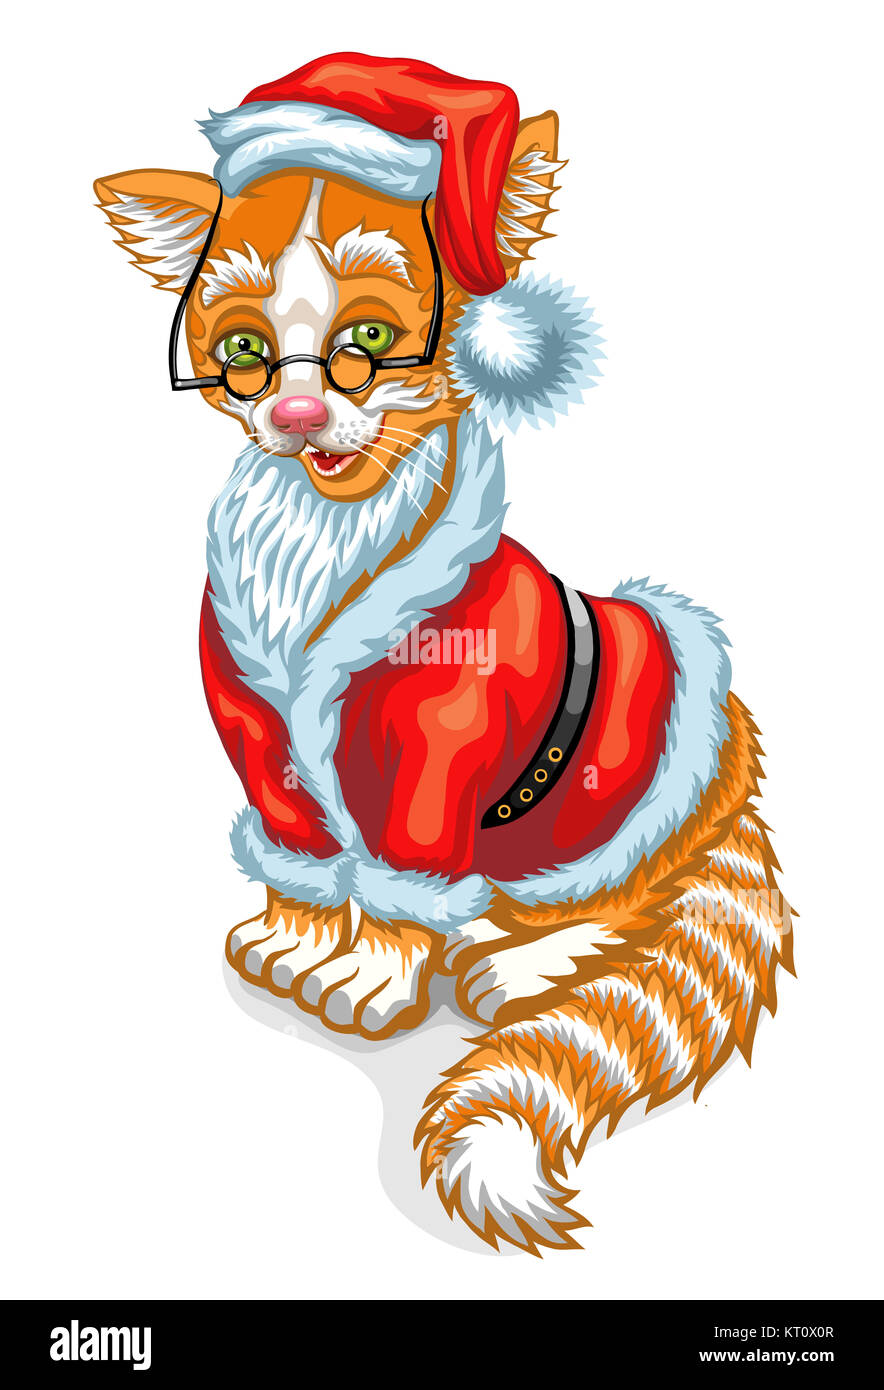 Cat Santa Claus. Christmas illustration Stock Photo